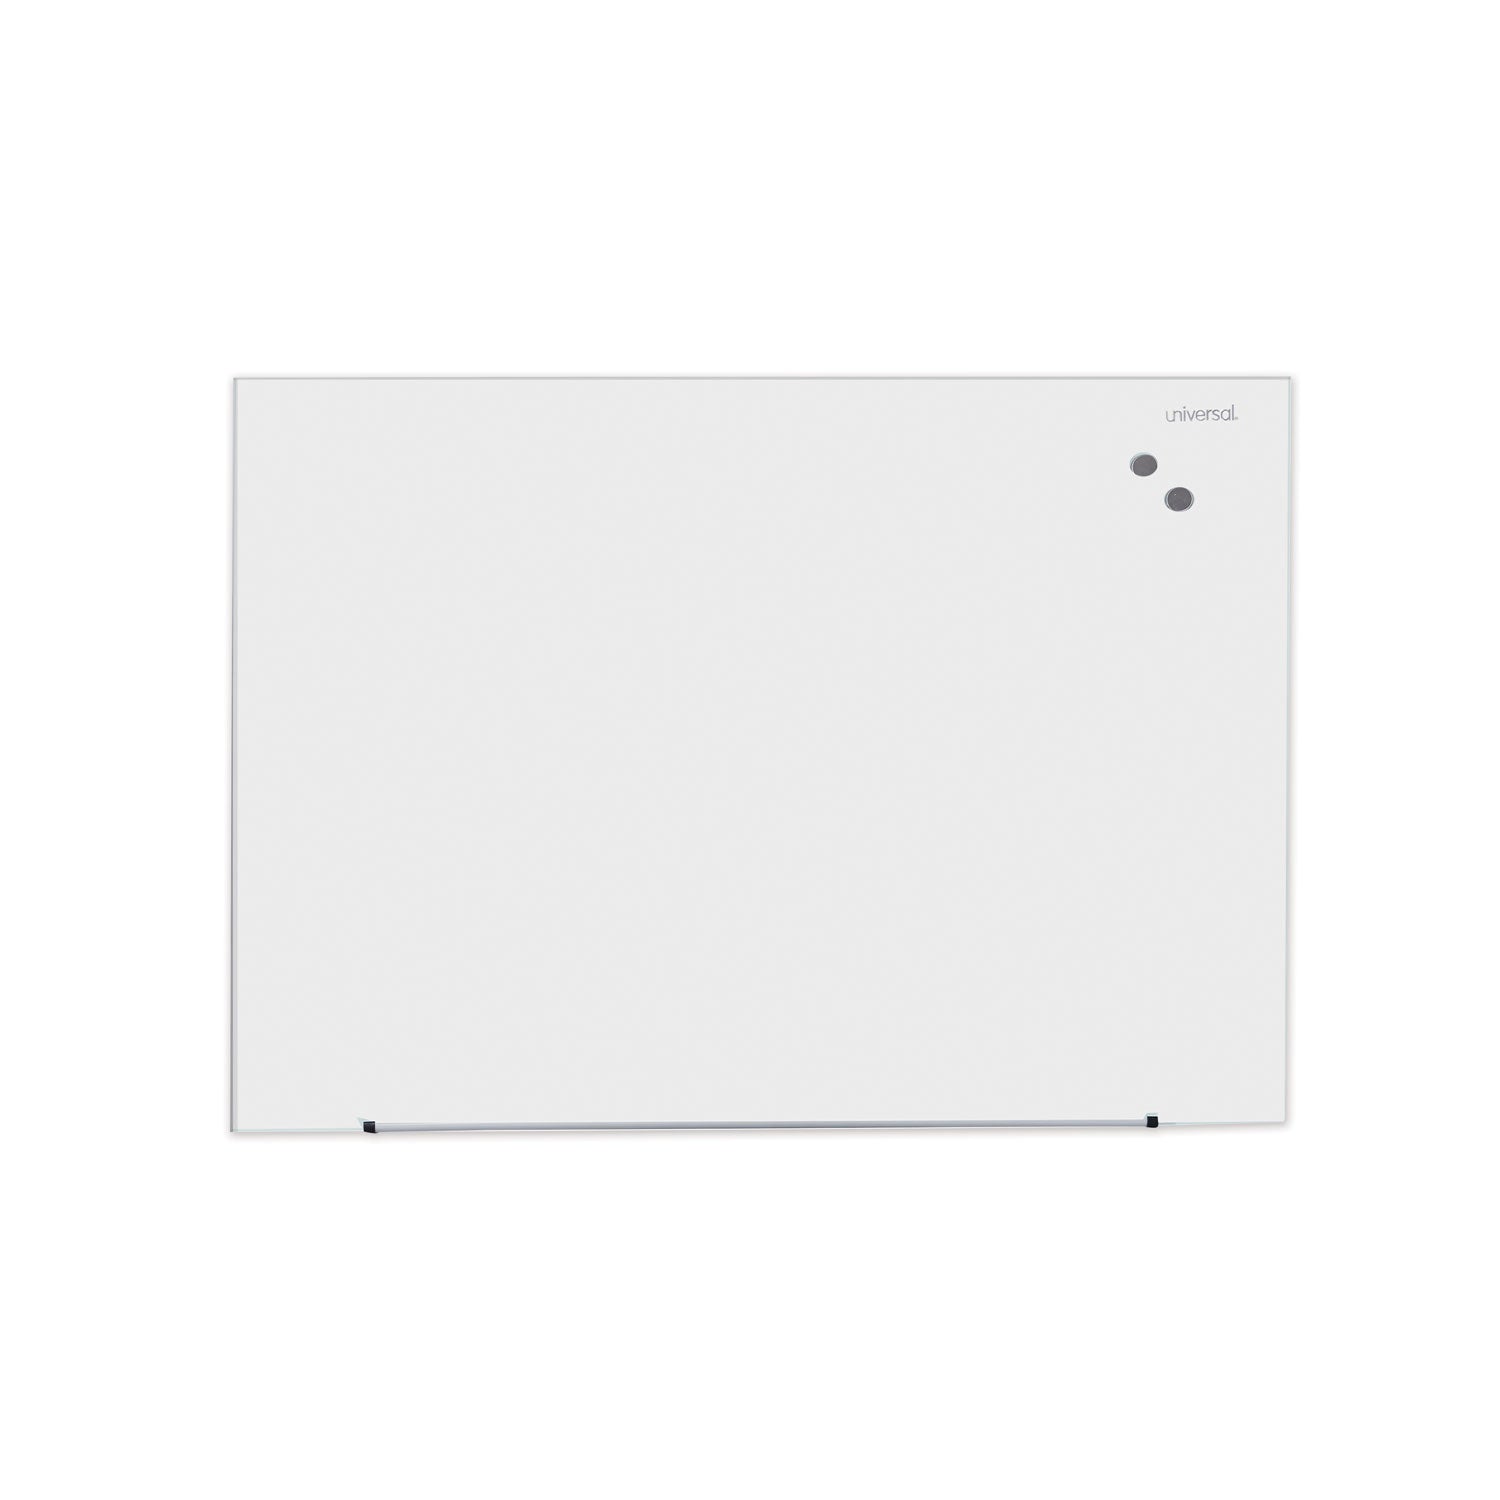 frameless-magnetic-glass-marker-board-48-x-36-white-surface_unv43203 - 1